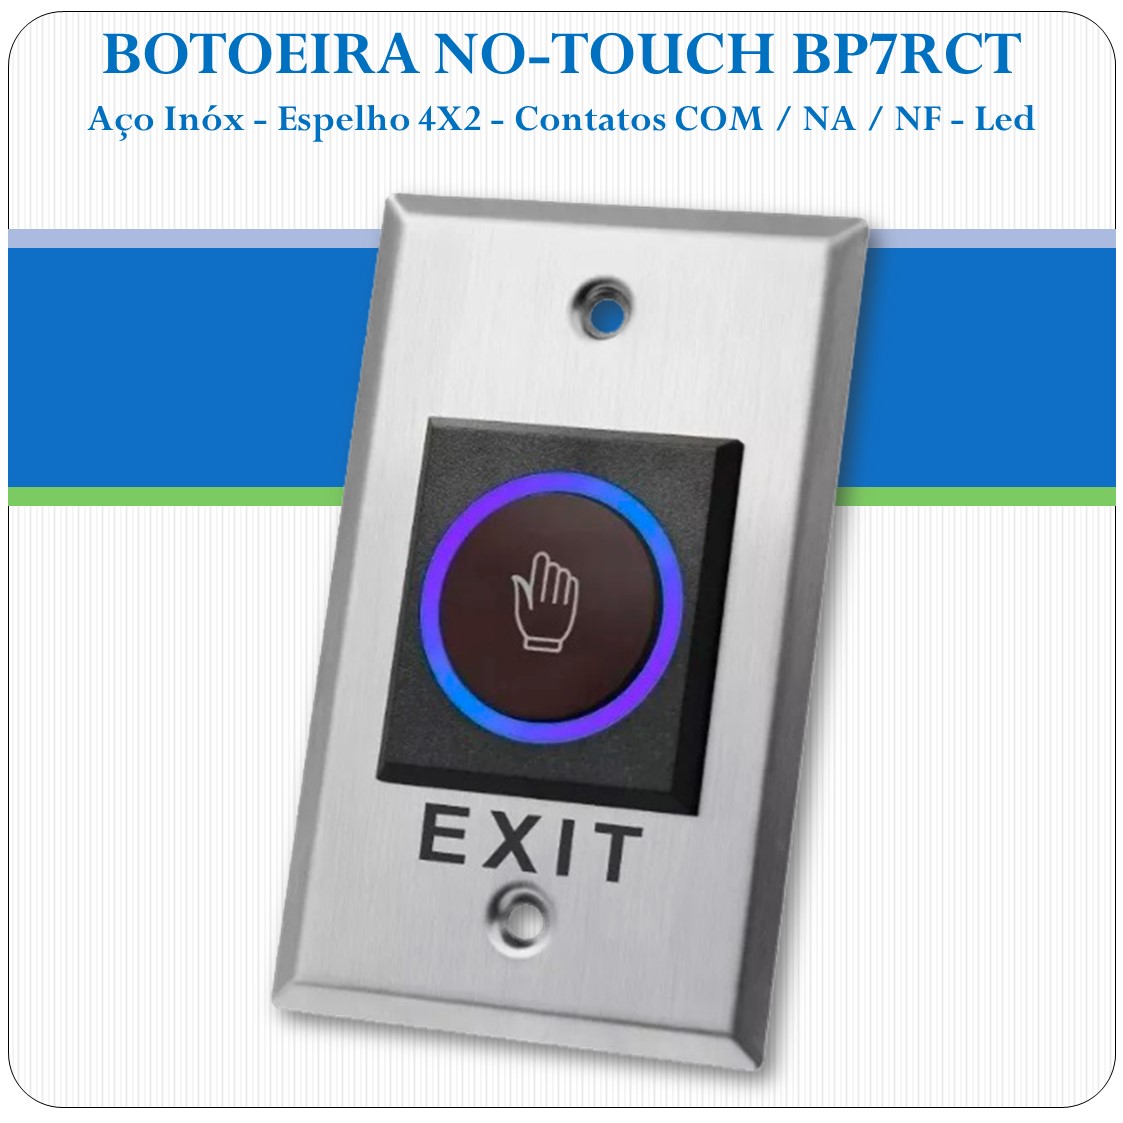 Botoeira Eletrônica No-Touch de Embutir NA-C-NF - BP7RCT